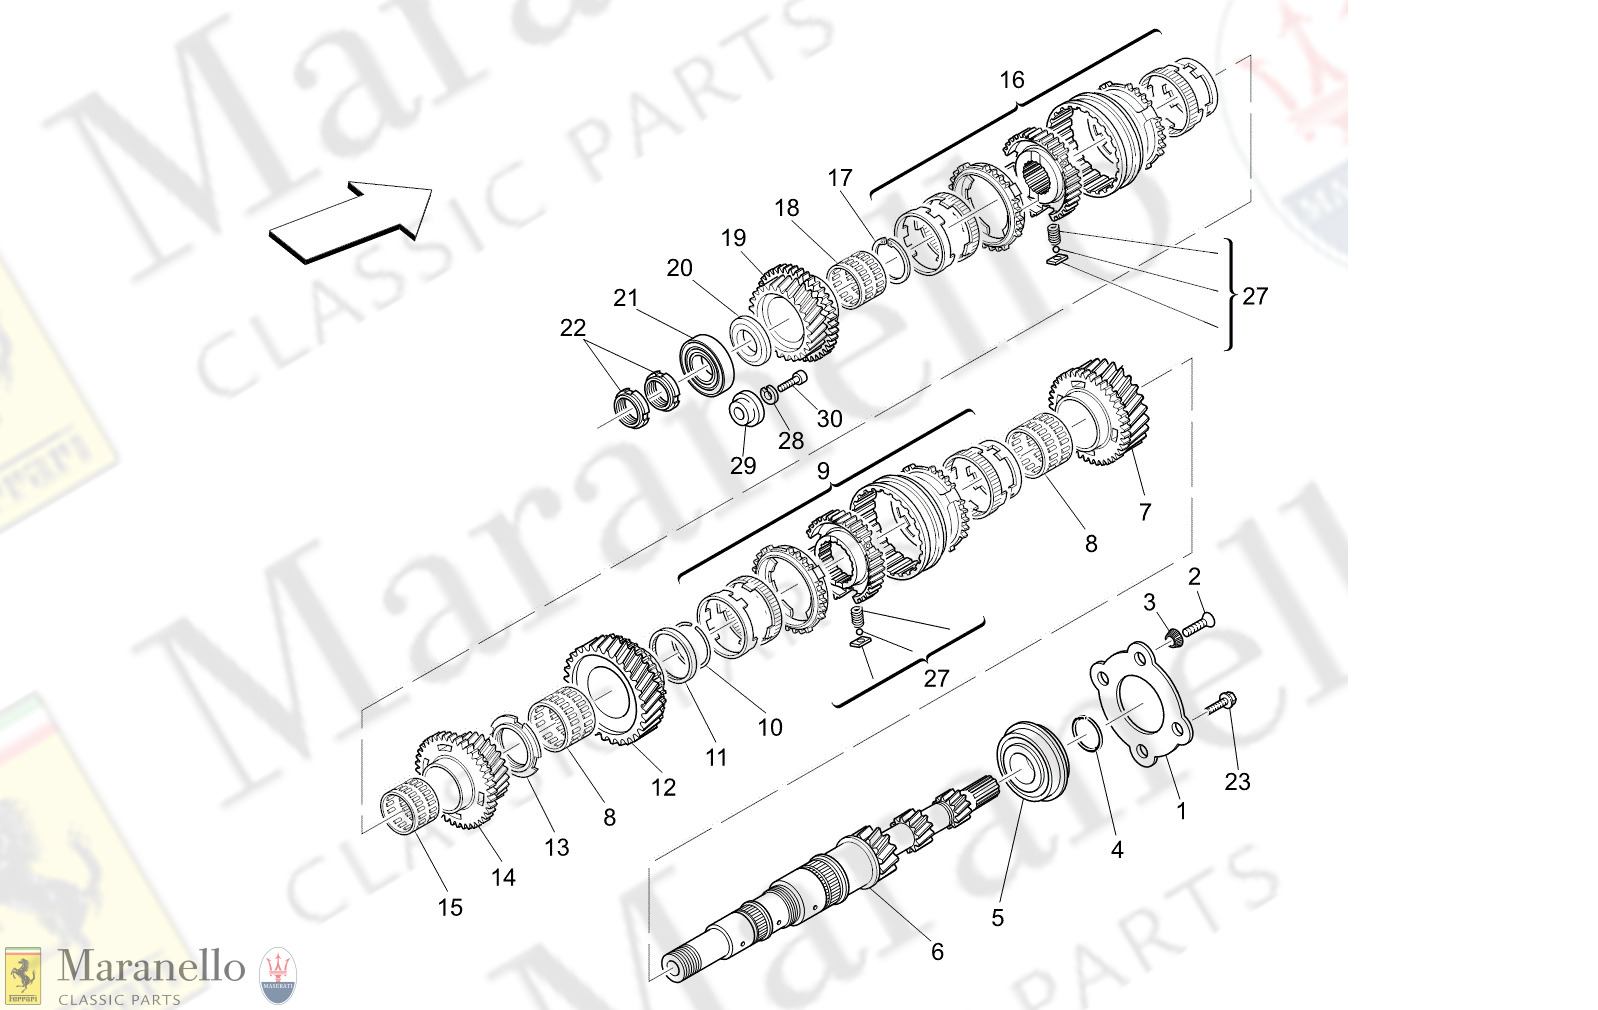 03.11 - 1 - 0311 - 1 Main Shaft Gears